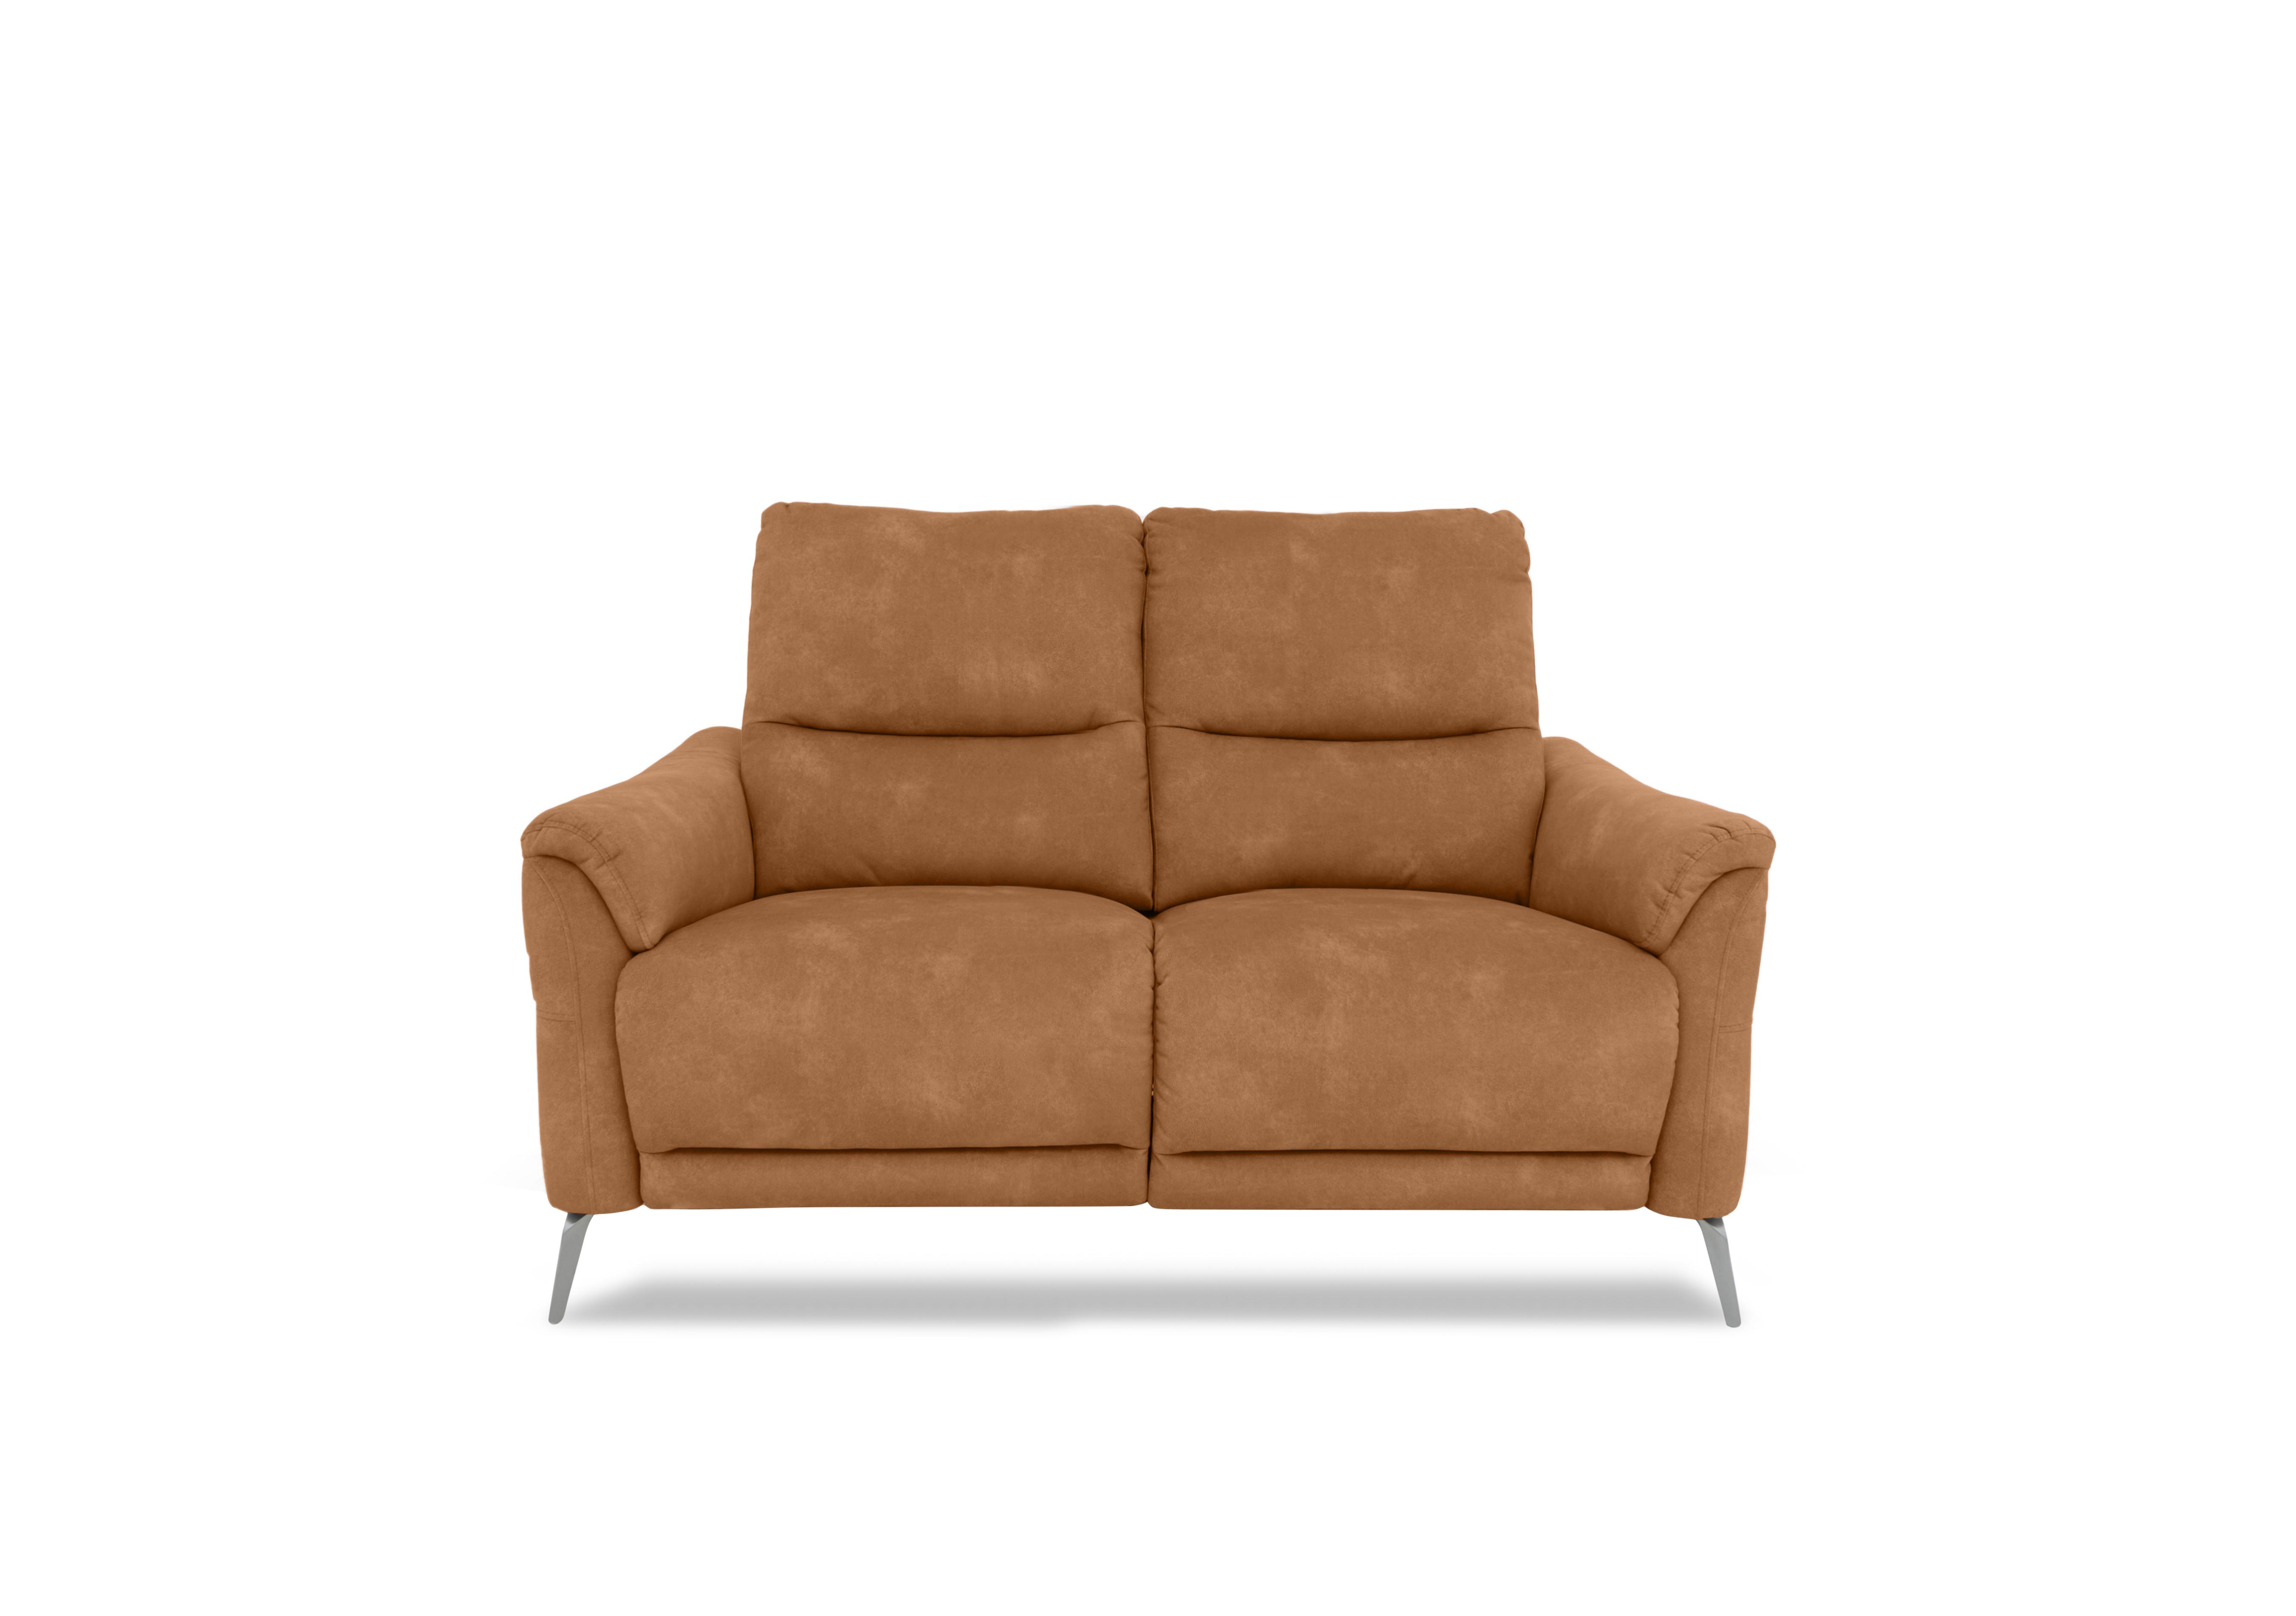 Daytona 2 Seater Fabric Sofa in 43509 Dexter Pumpkin on Furniture Village